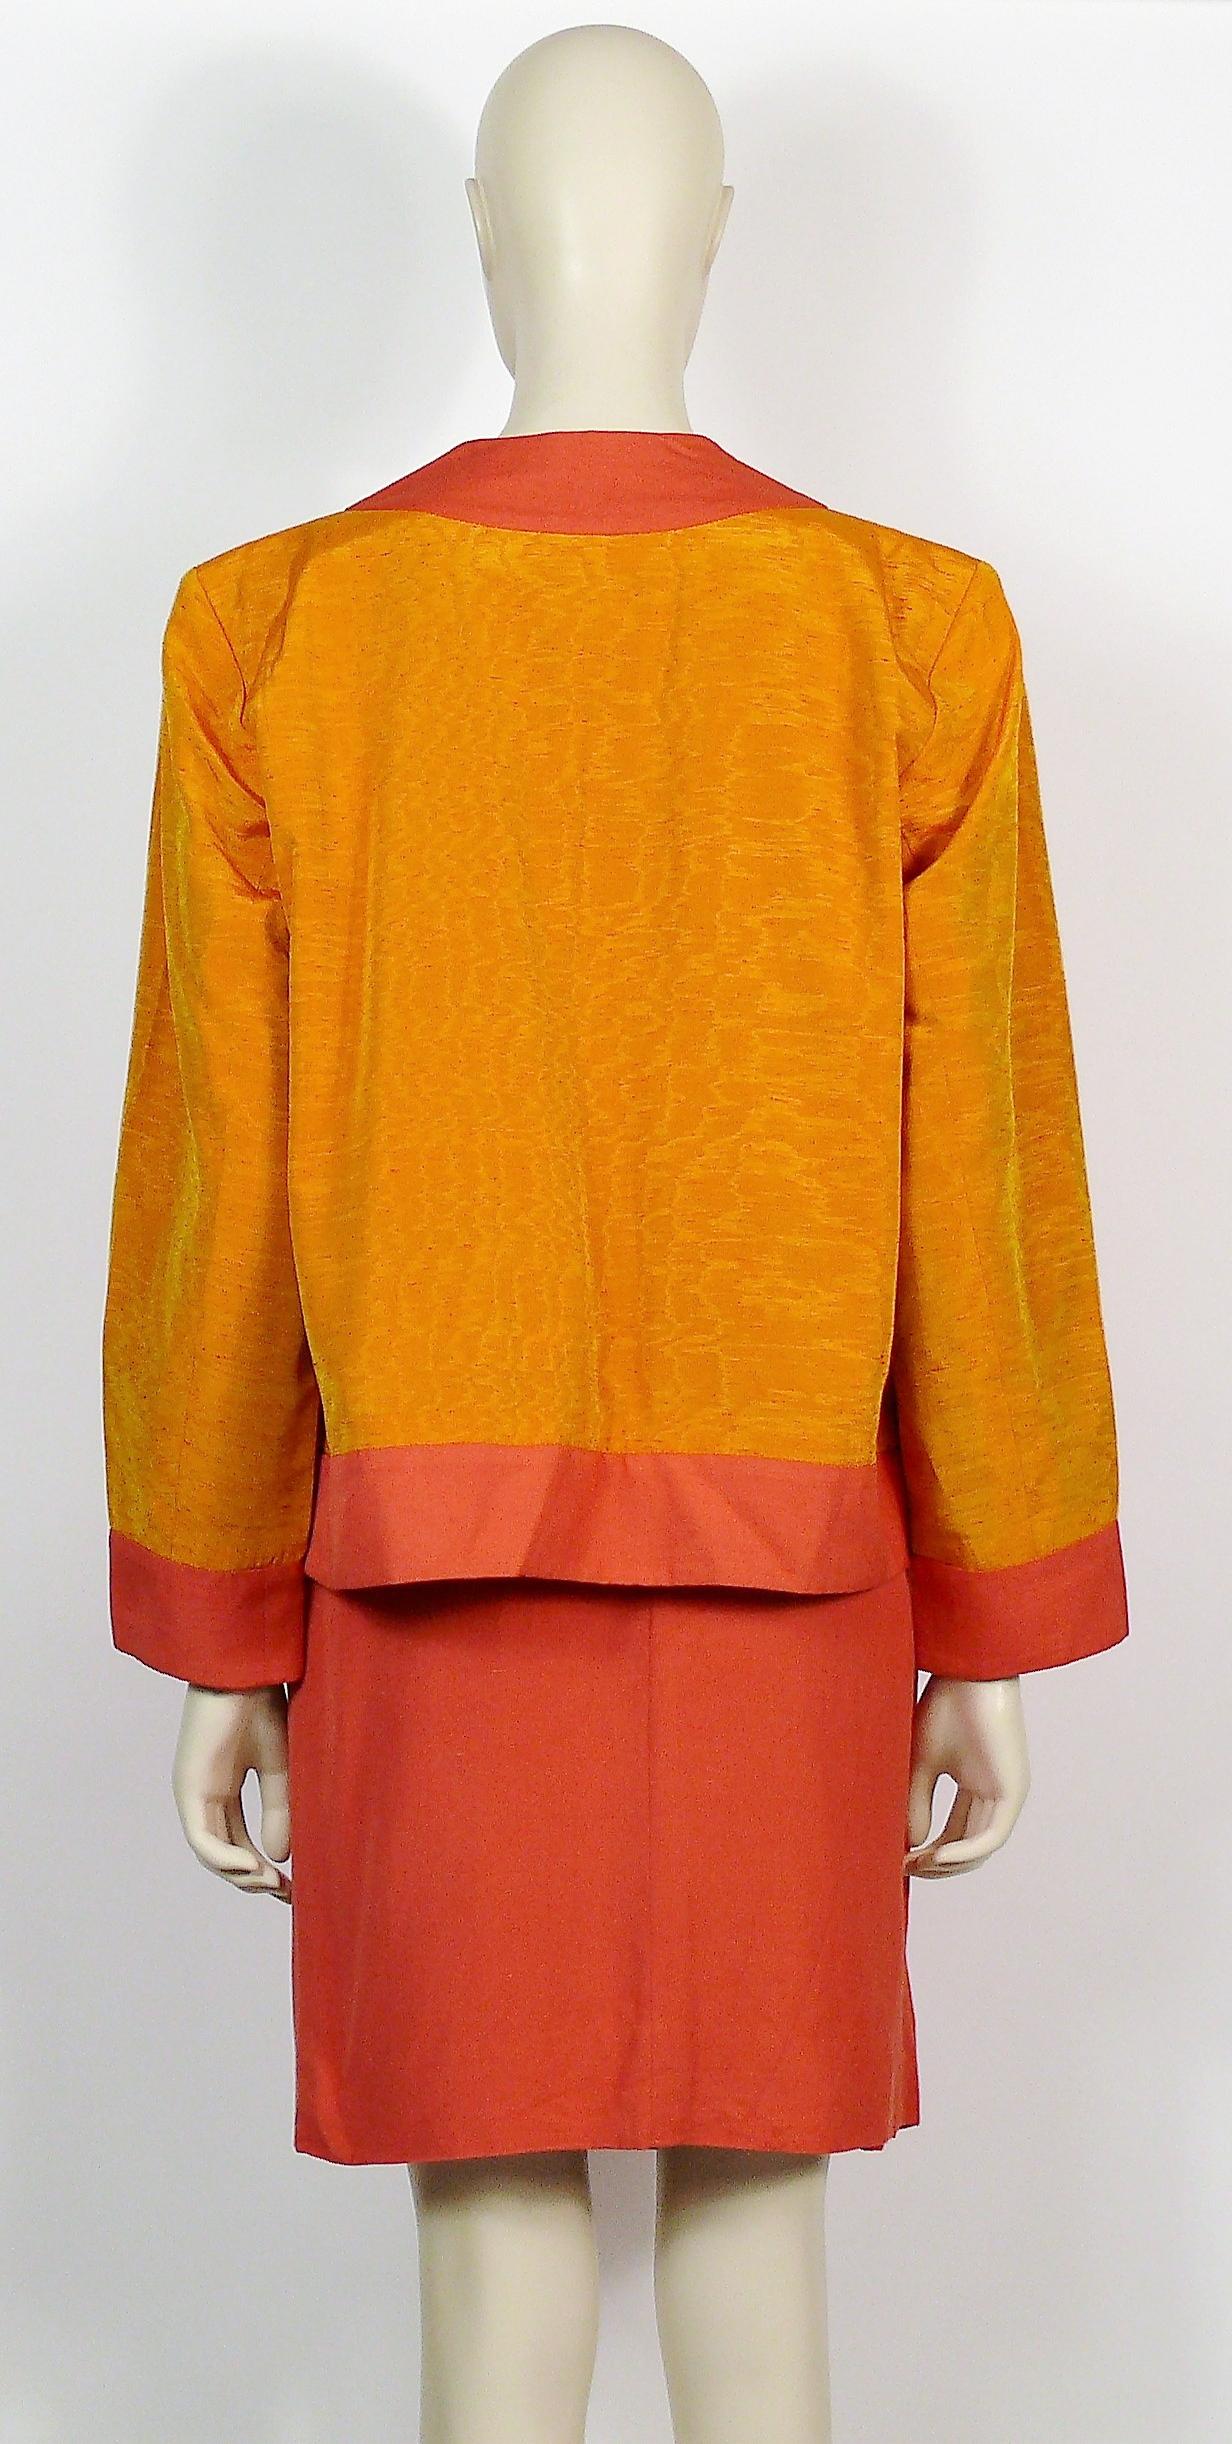 Yves Saint Laurent YSL Oriental Inspired Jacket and Skirt Ensemble For Sale 6